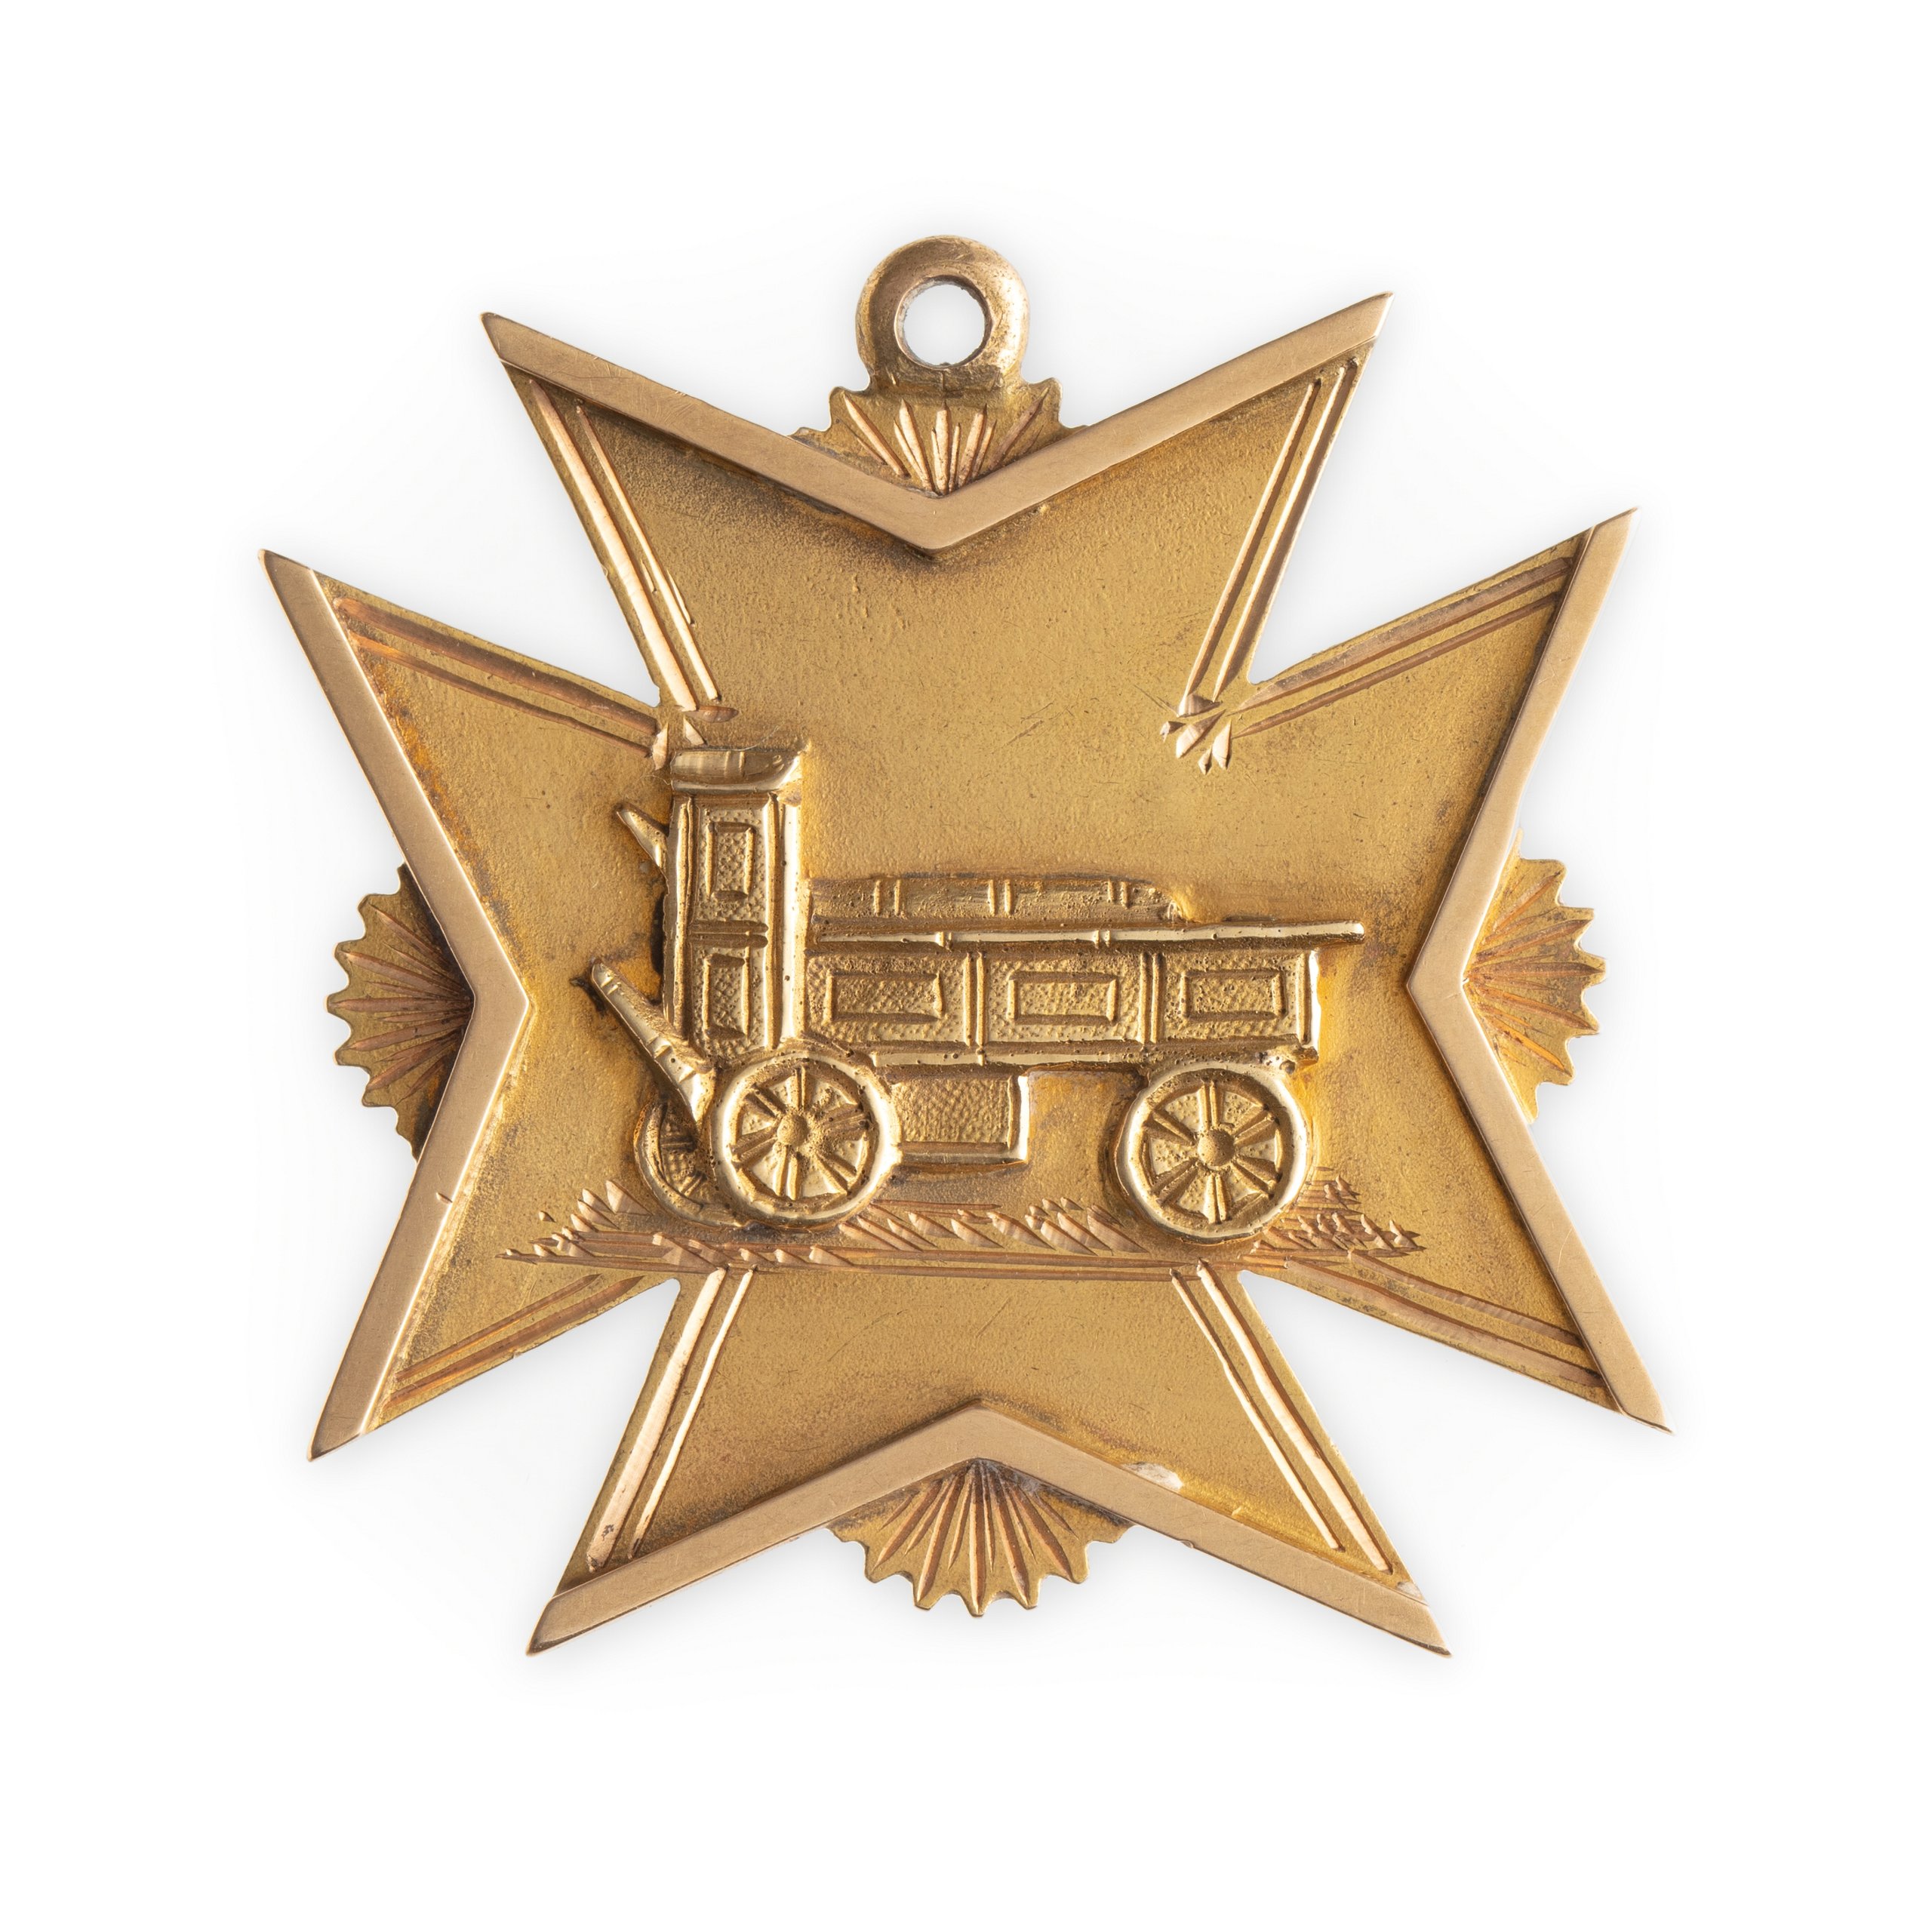 'Redfern Volunteer Fire Brigade' badge